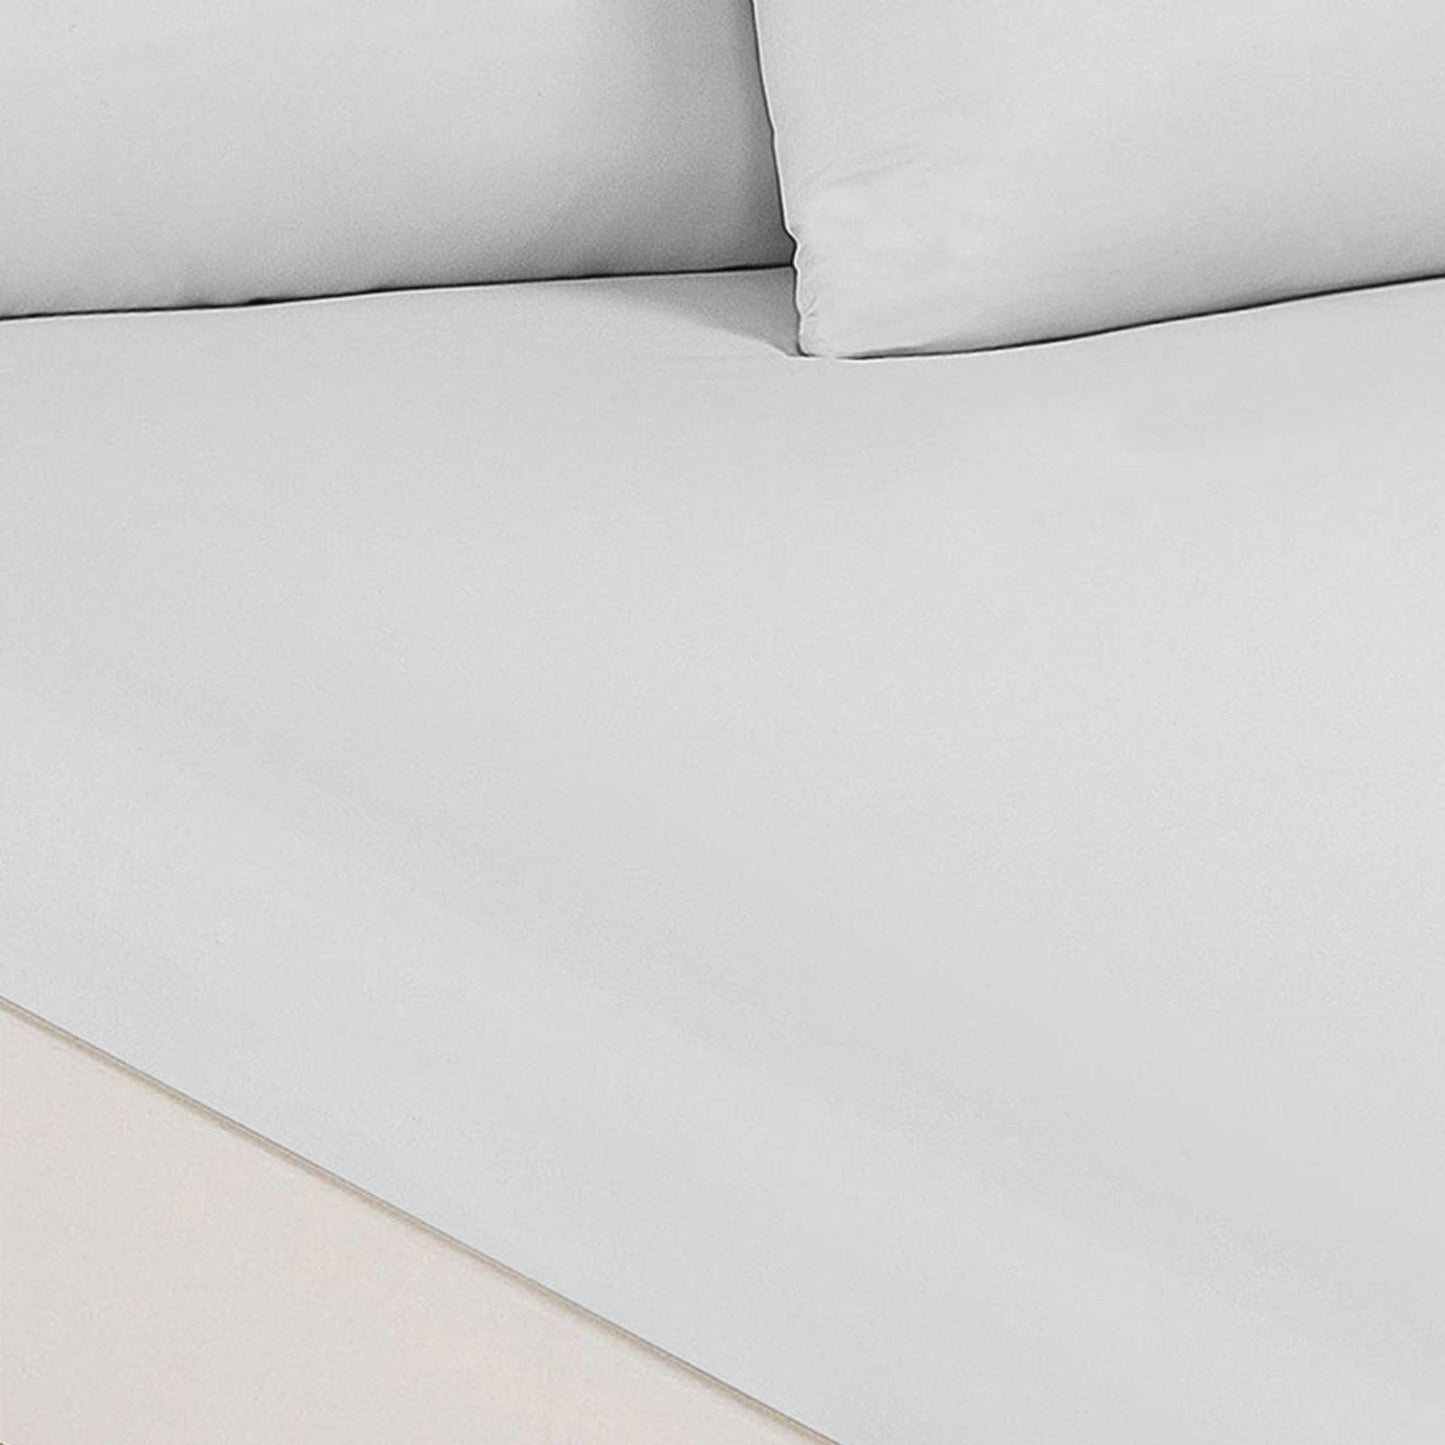 Park Avenue 1000TC Cotton Blend Sheet & Pillowcases Set Hotel Quality Bedding - Queen - White